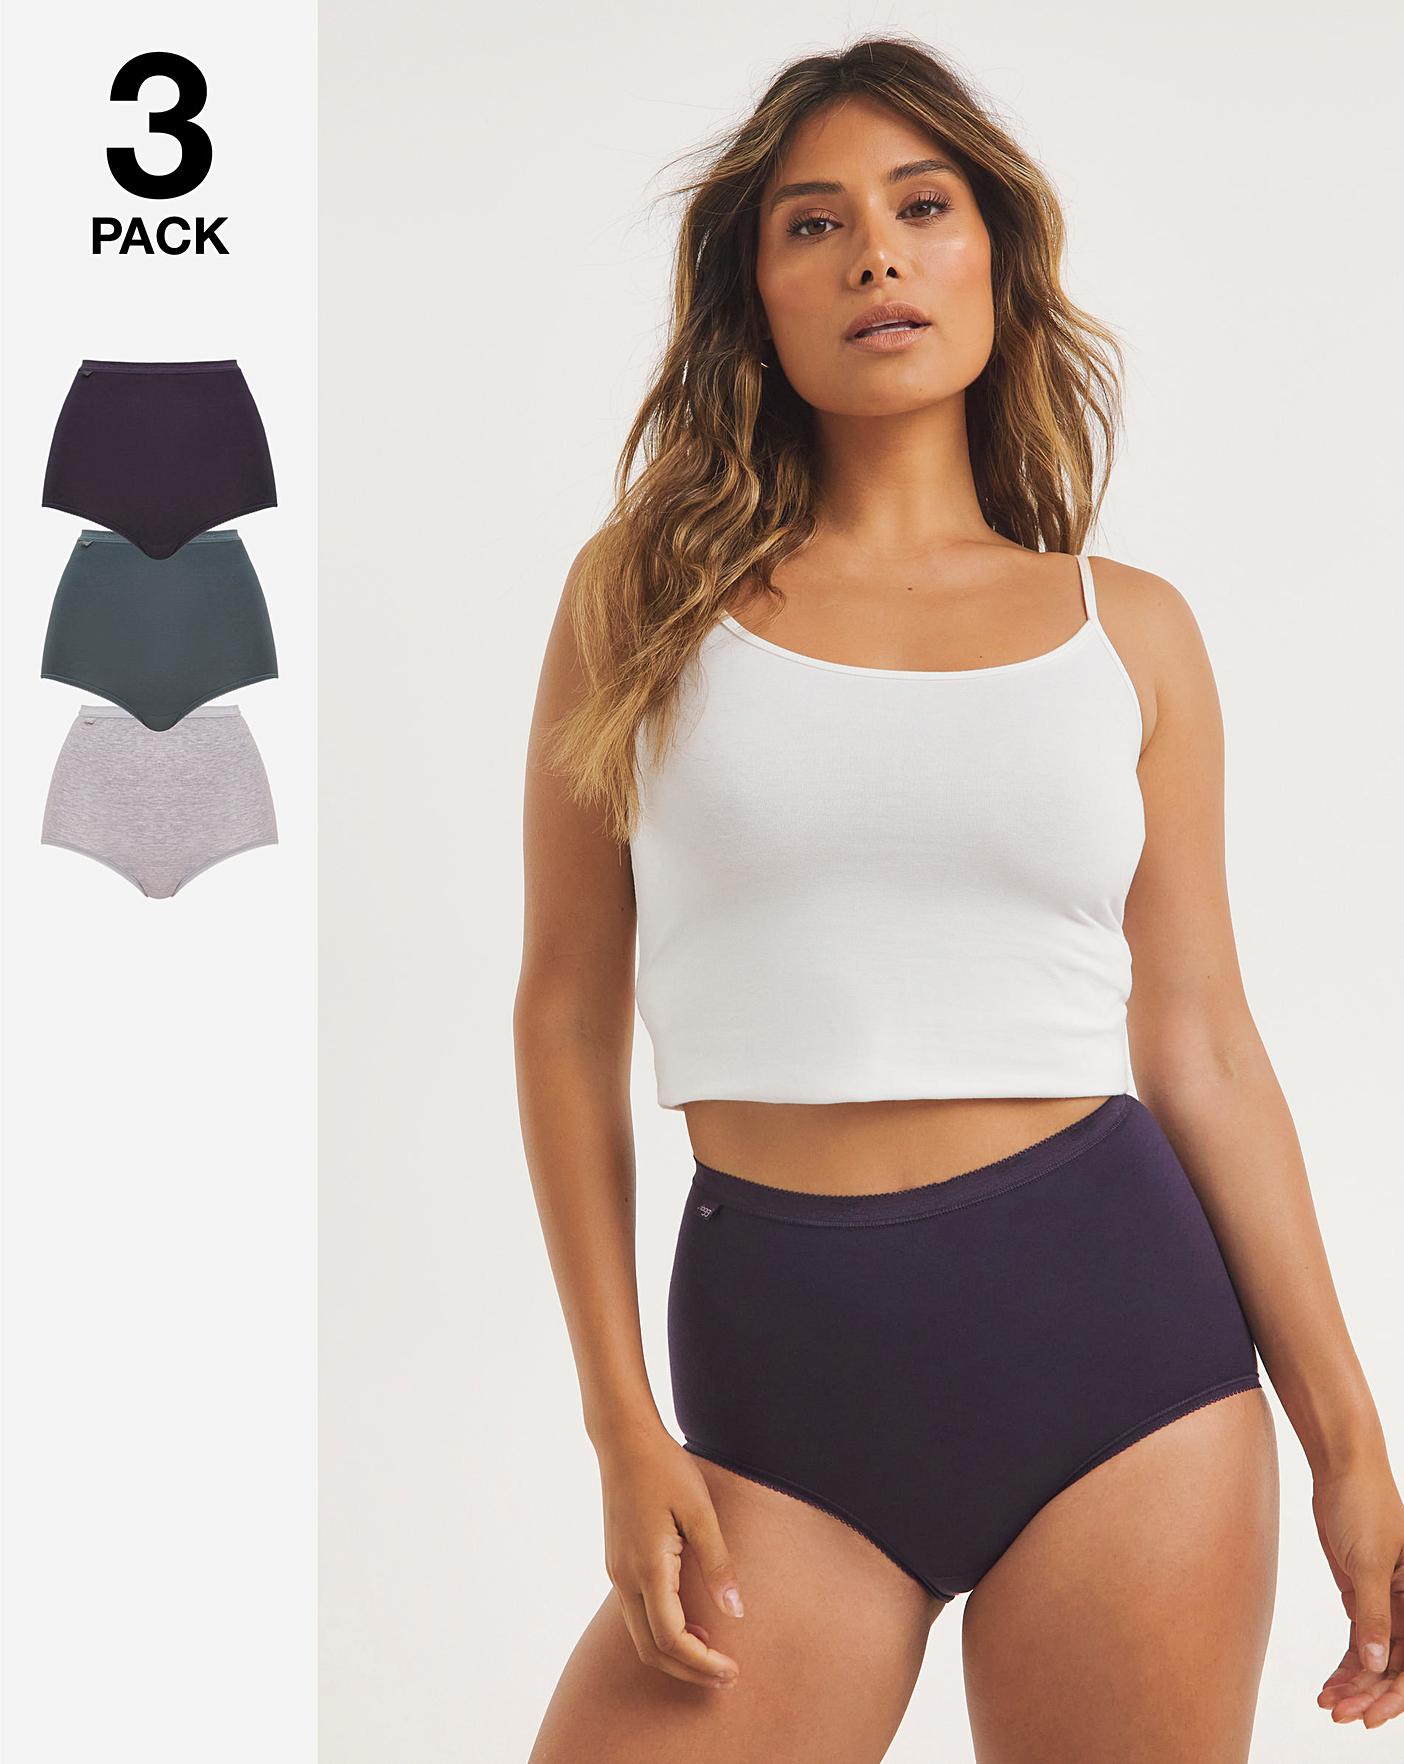 Sloggi - Triumph (JO)  Shop Online Sloggi Underwear